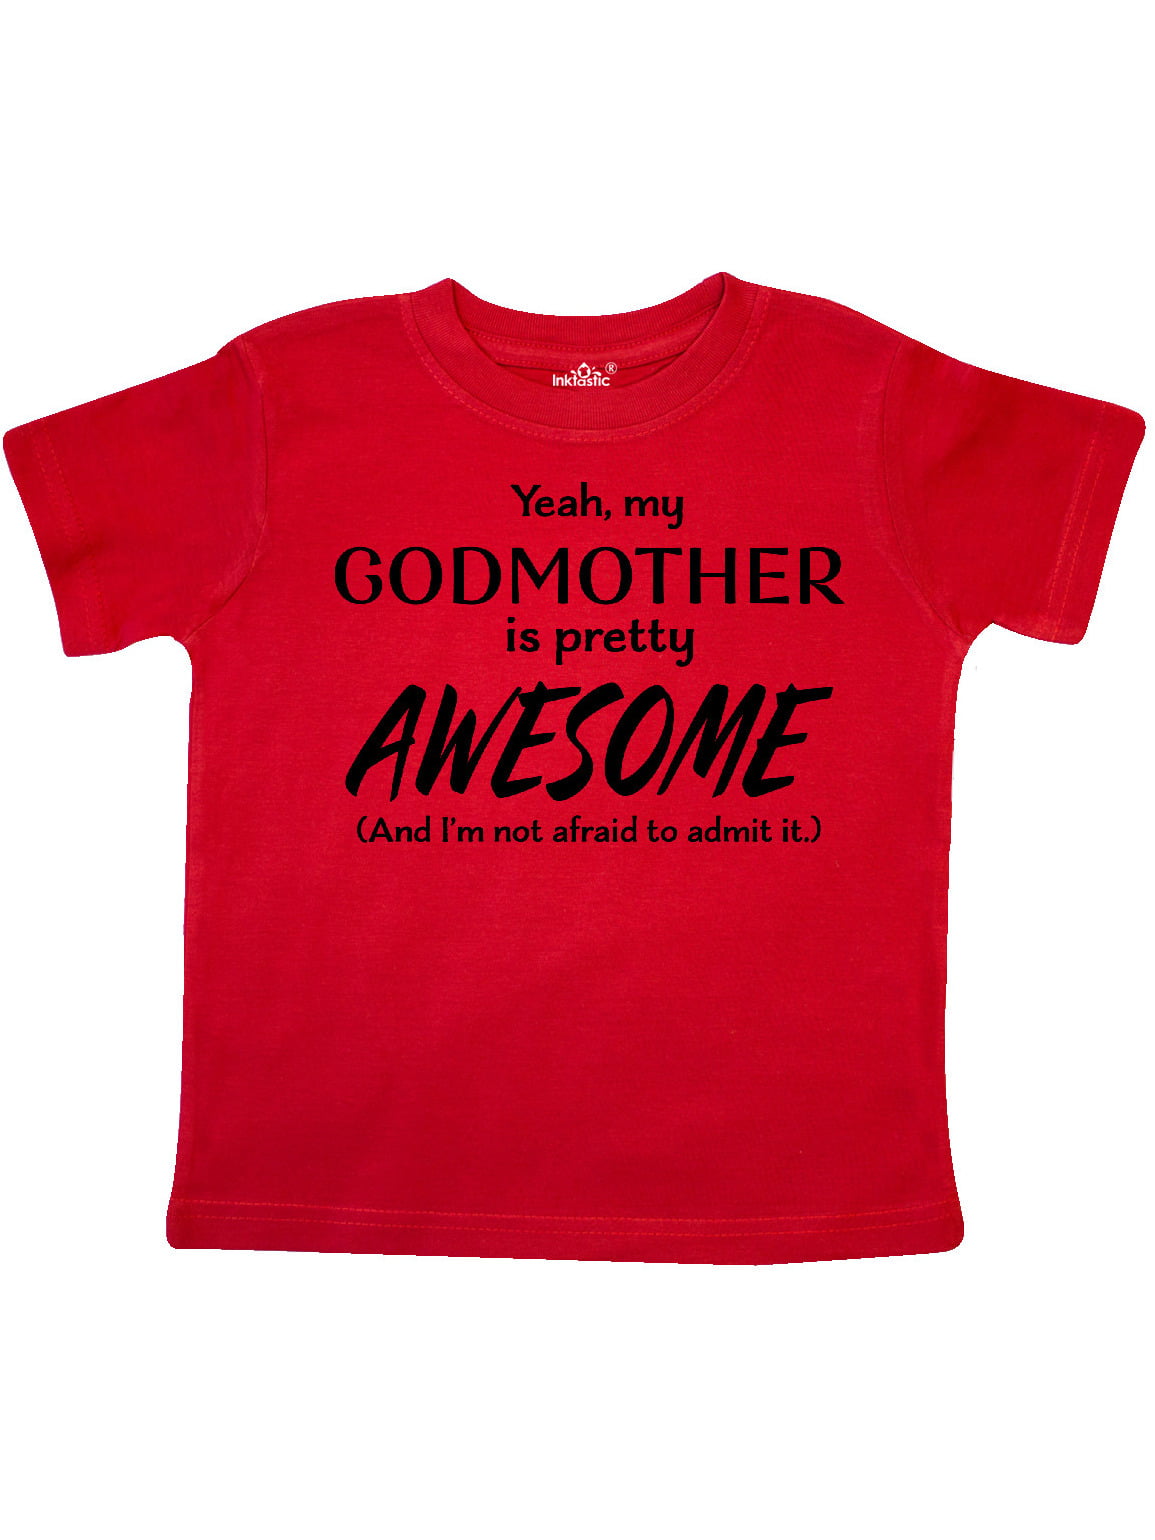 My Godmother in Arizona Loves Me Toddler/Kids Sweatshirt Red 5/6T 